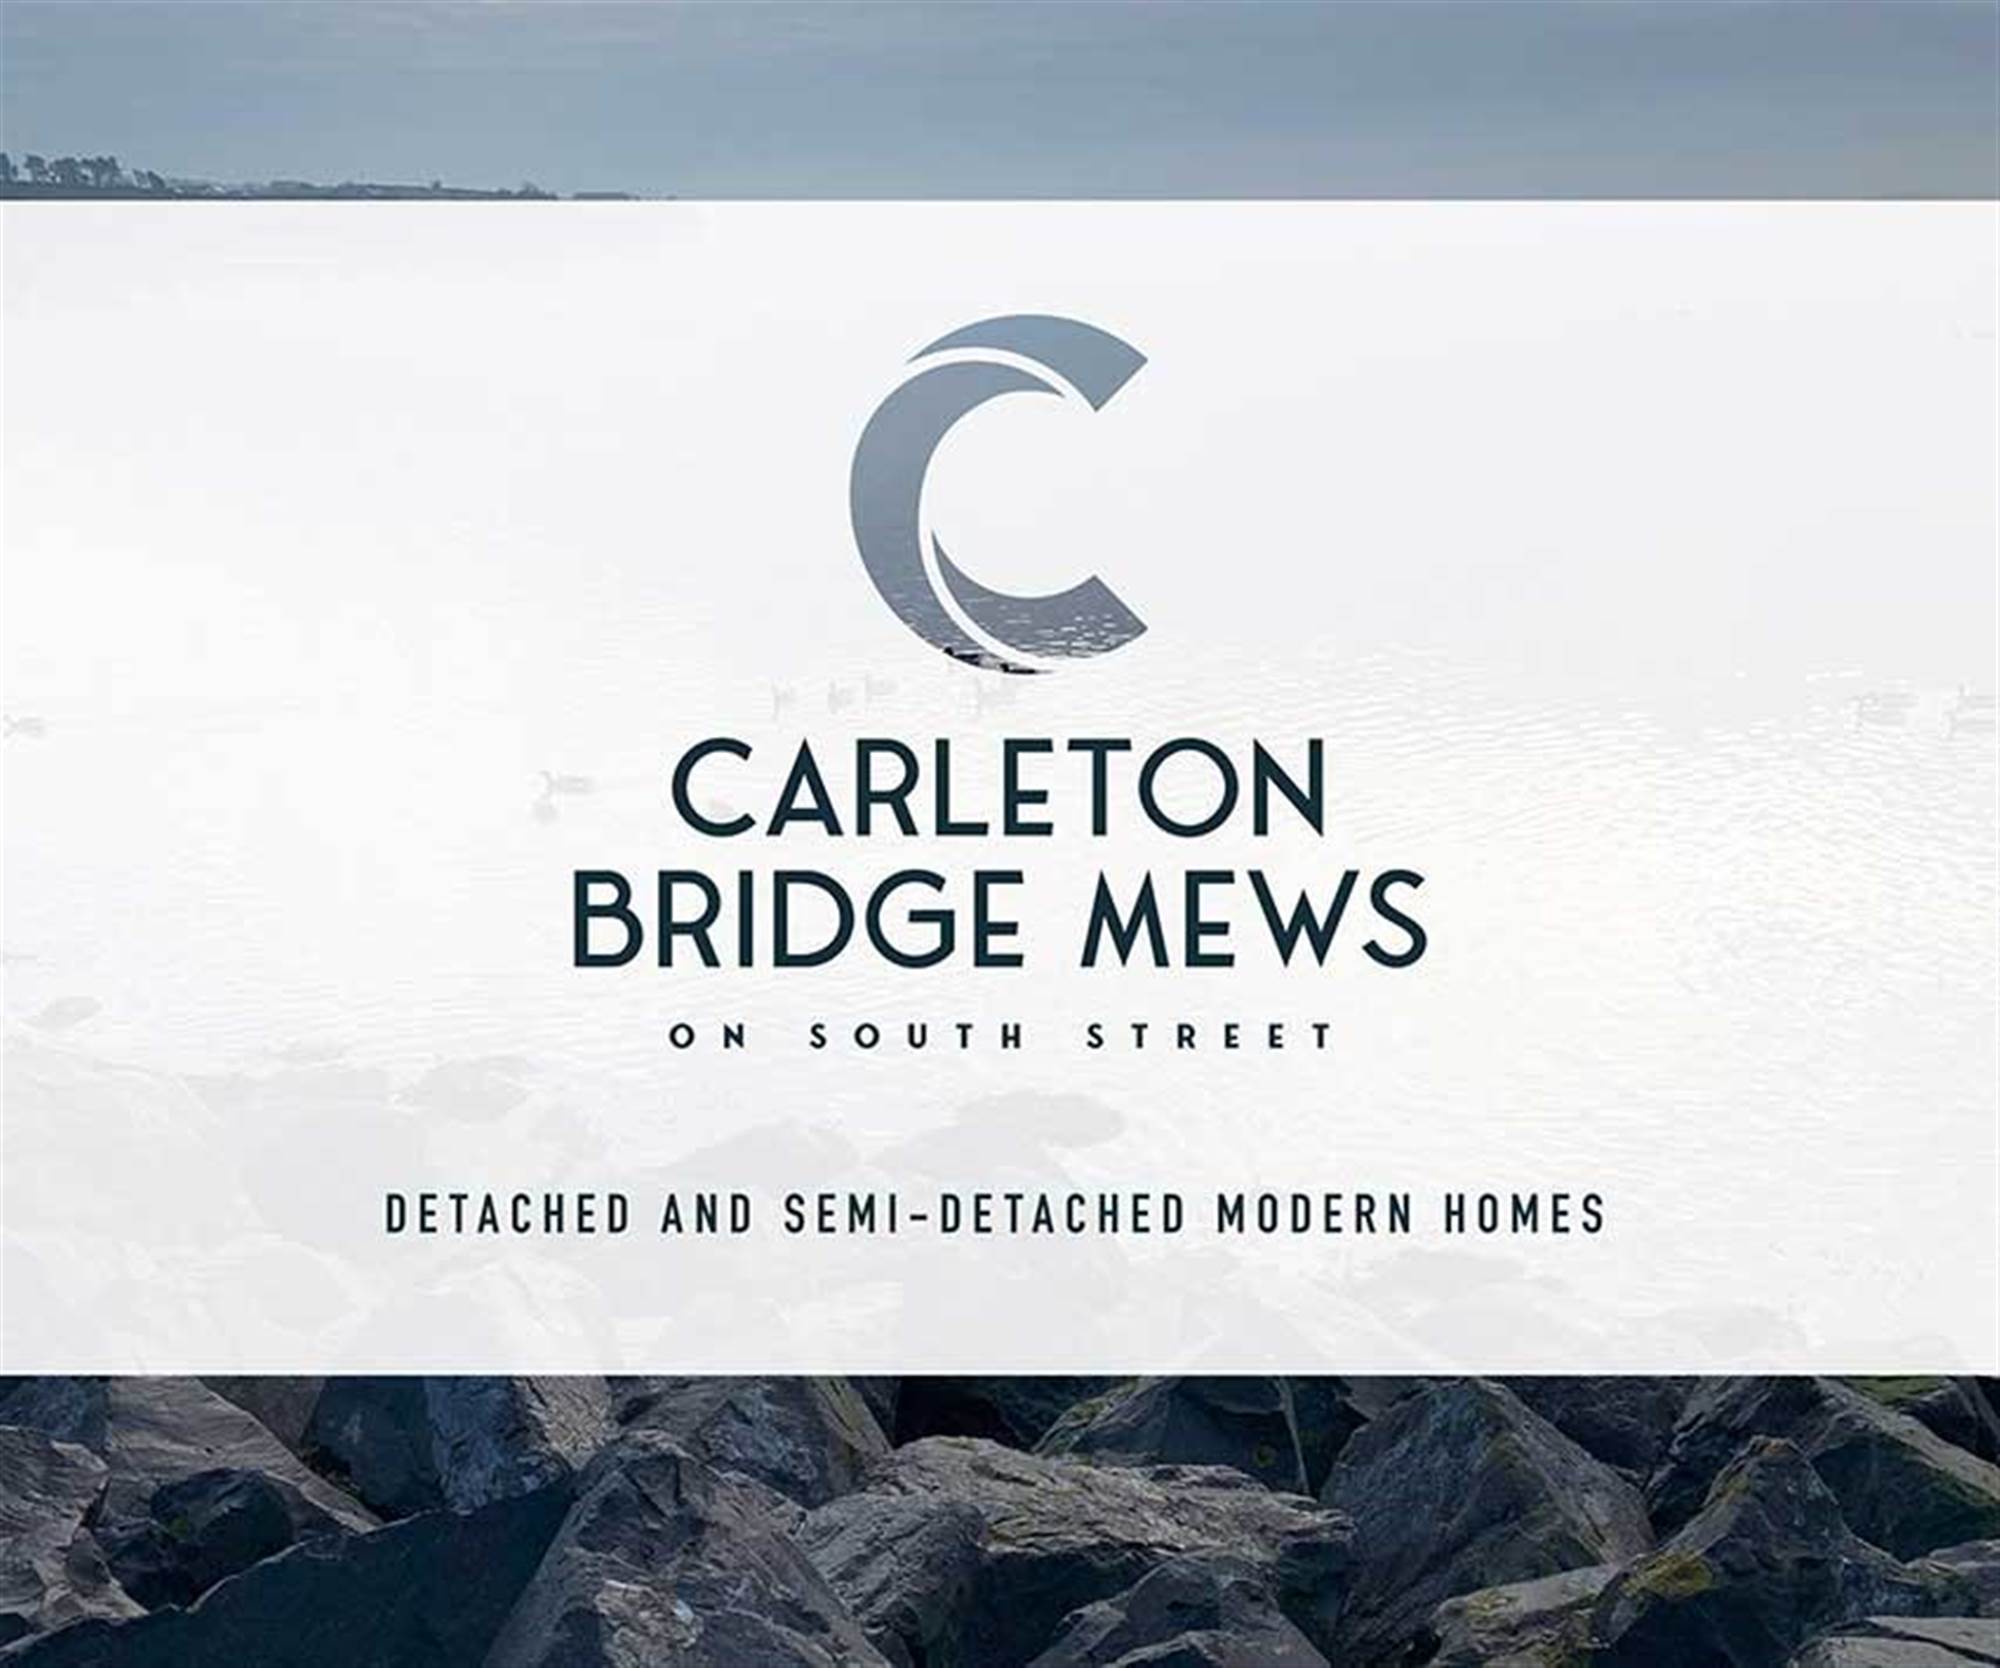 37 Carleton Bridge Mews